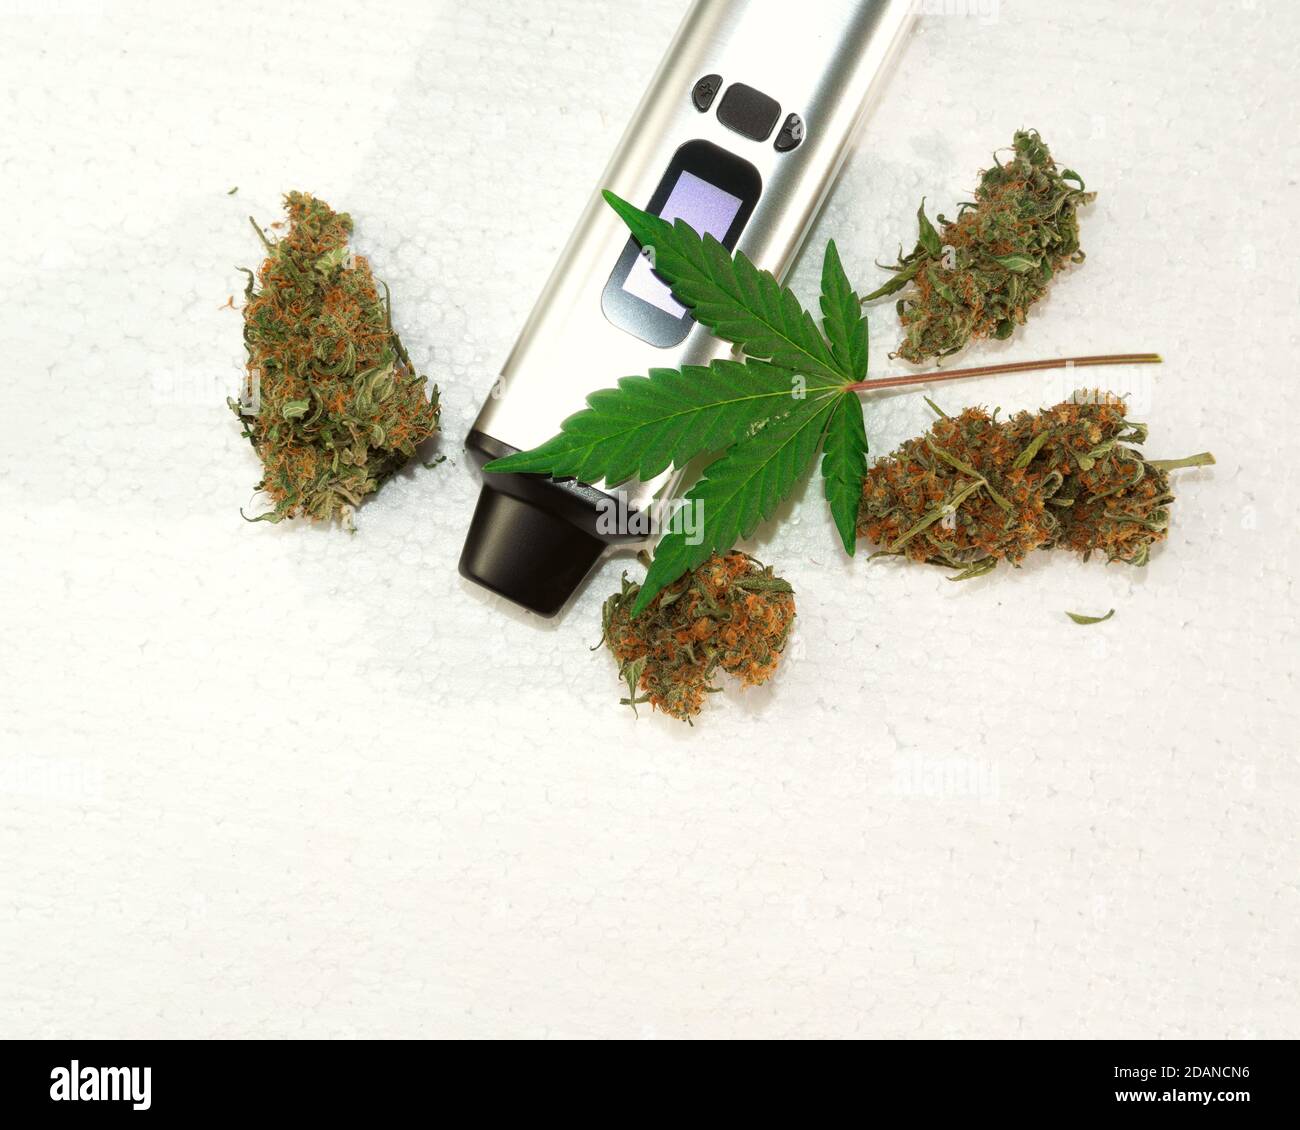 portable electronic vaporizer for smoking dry herbs next to hemp leaves Stock Photo